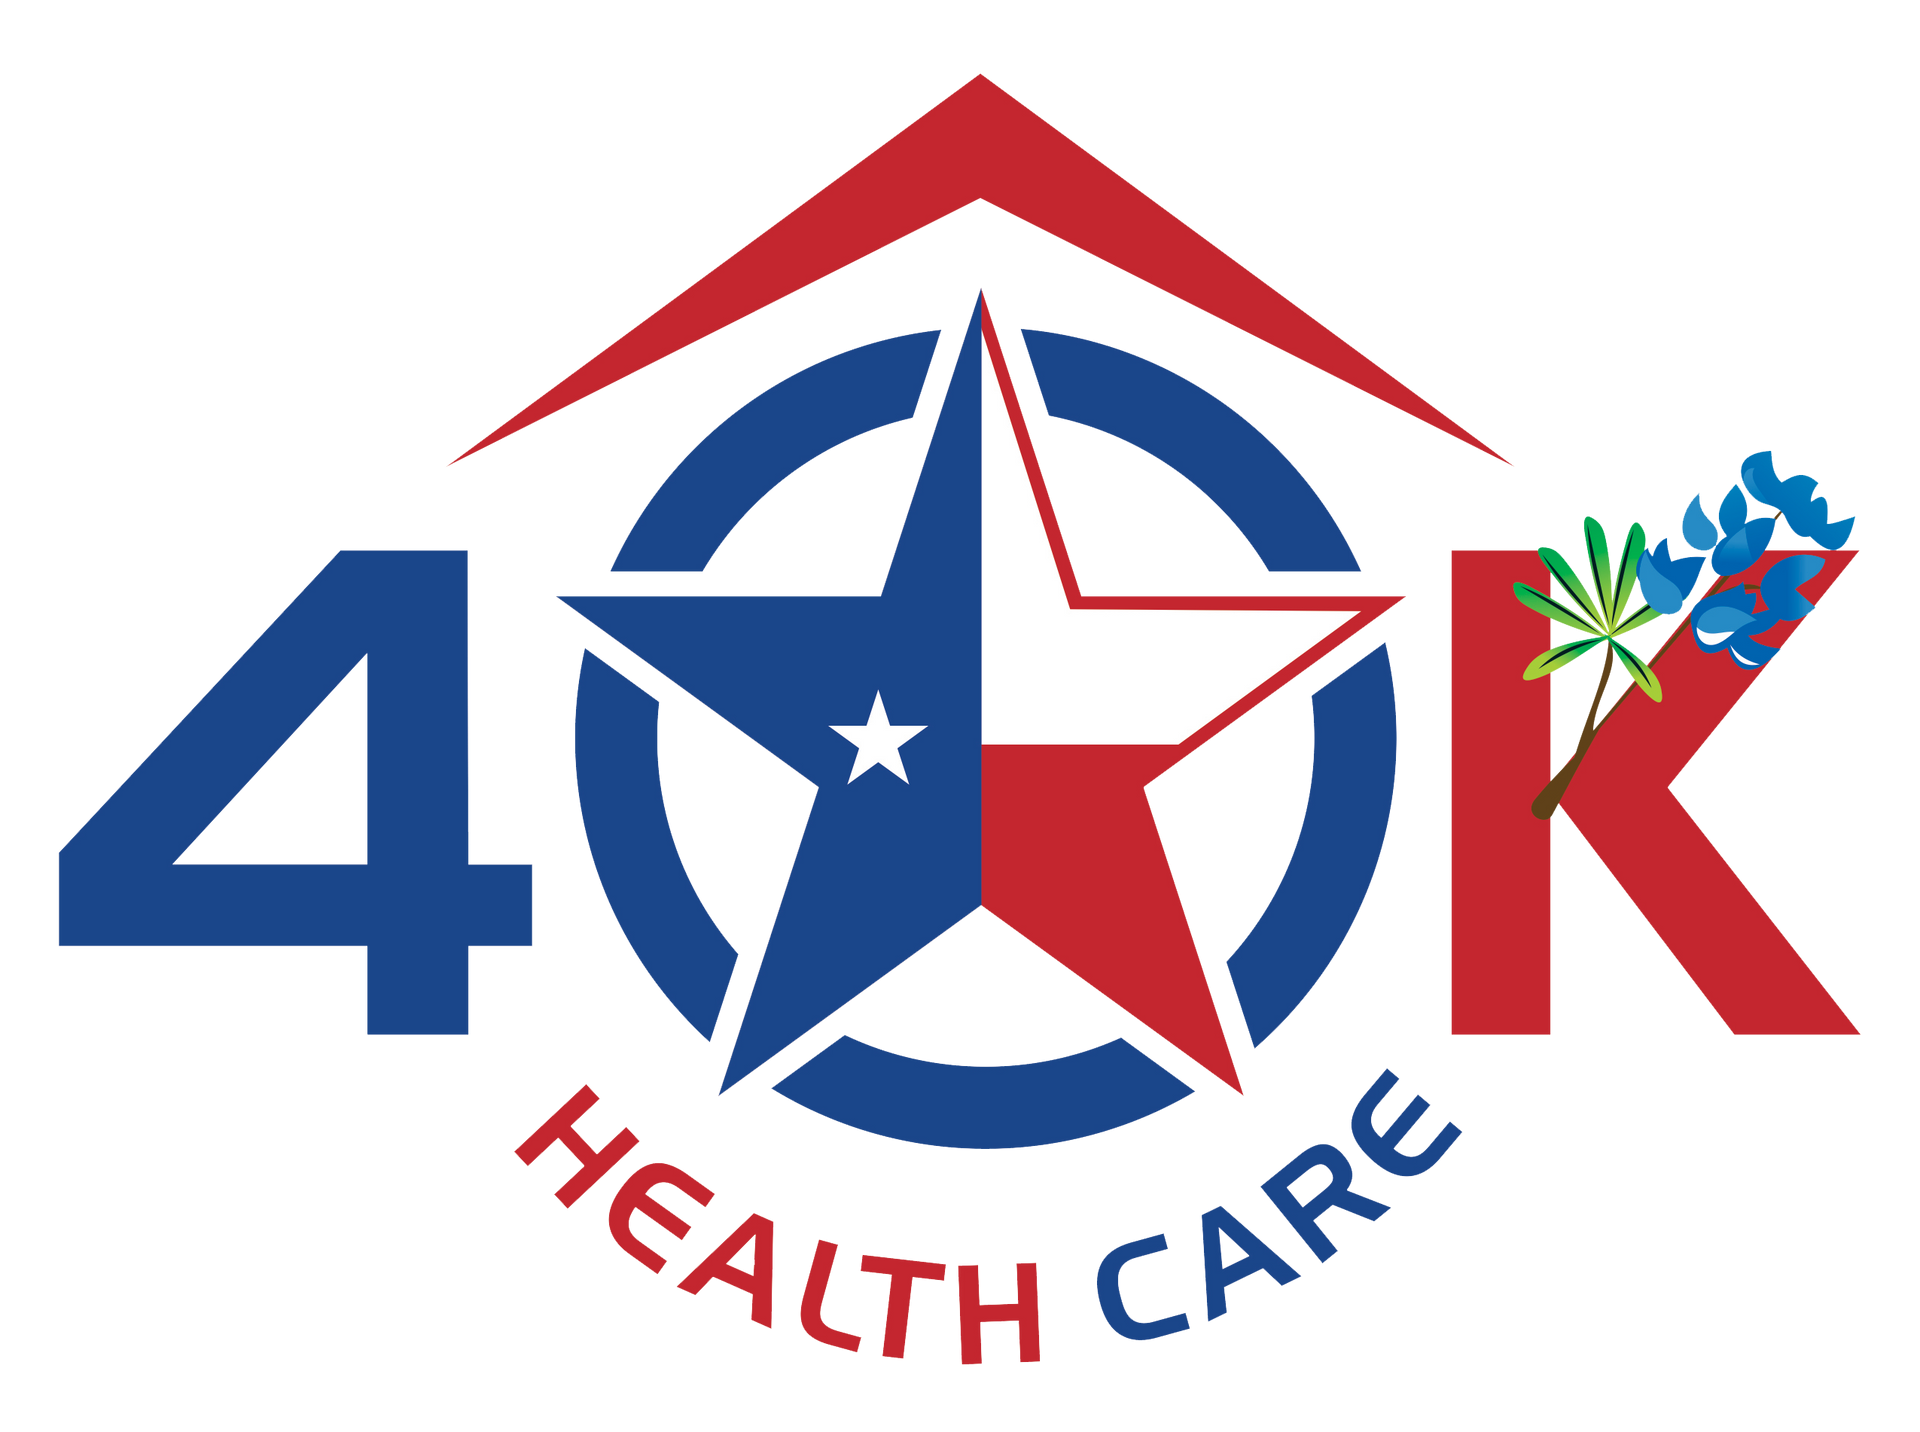 4k health care logo